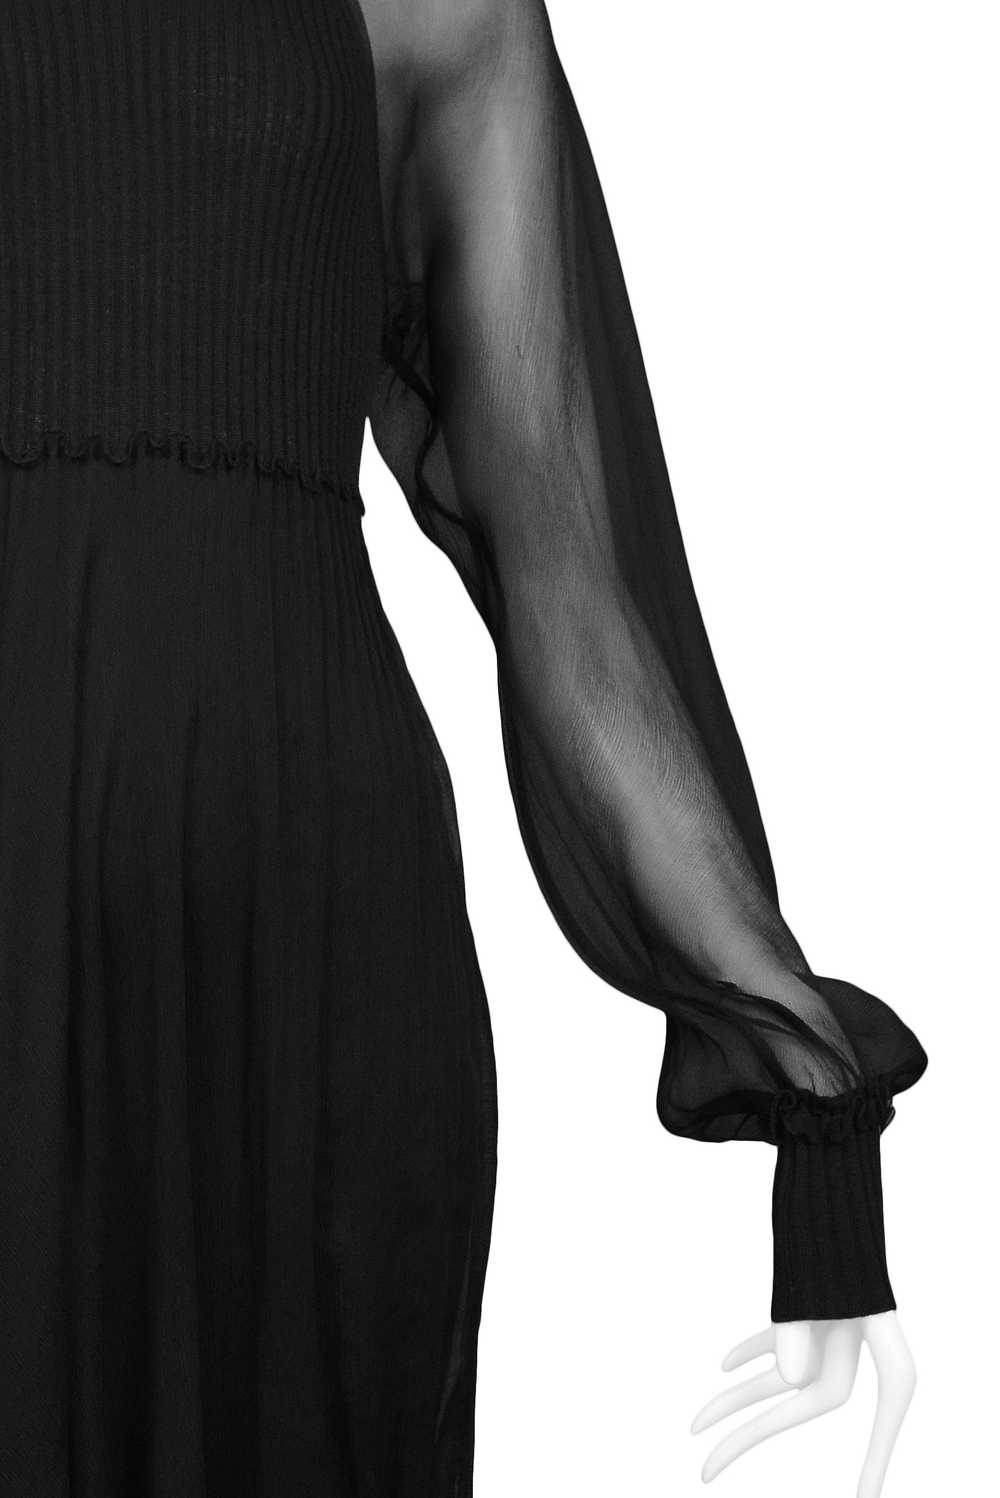 GAULTIER BLACK KNIT ILLUSION DRESS WITH CHIFFON O… - image 4